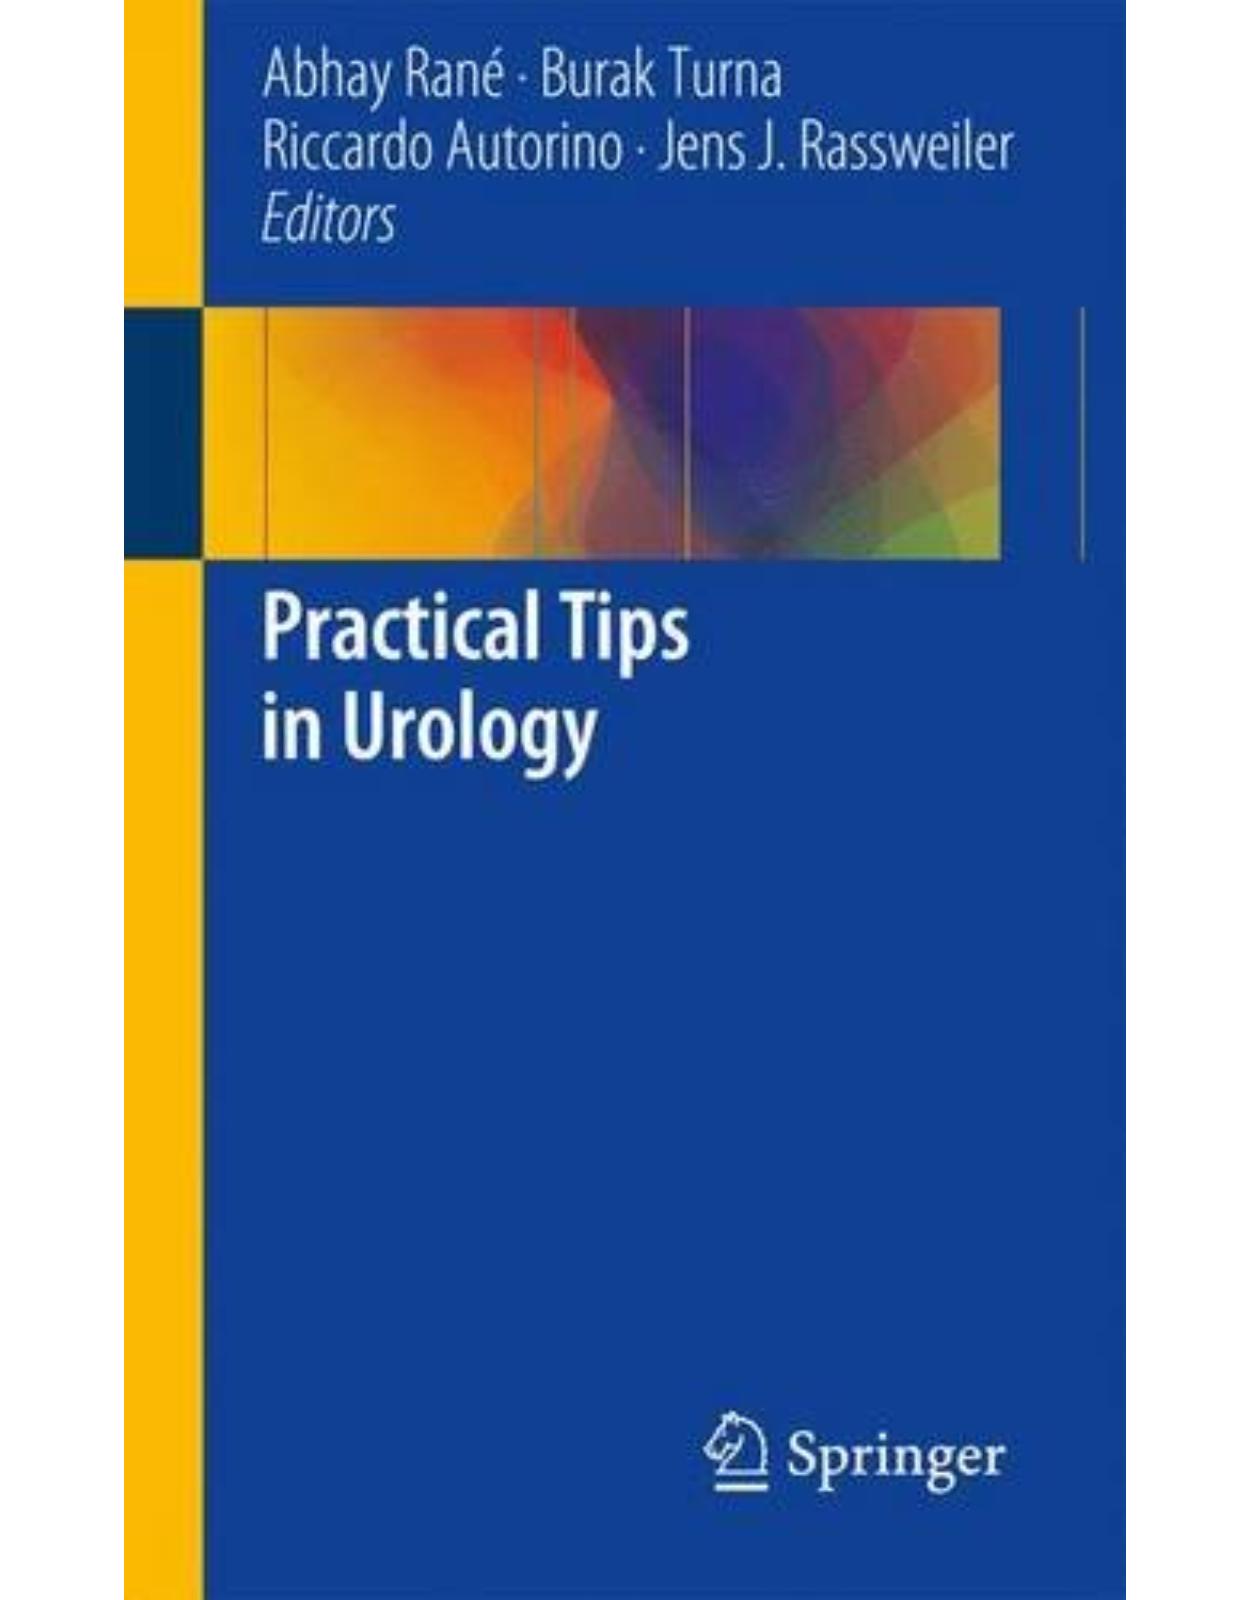 Practical Tips in Urology